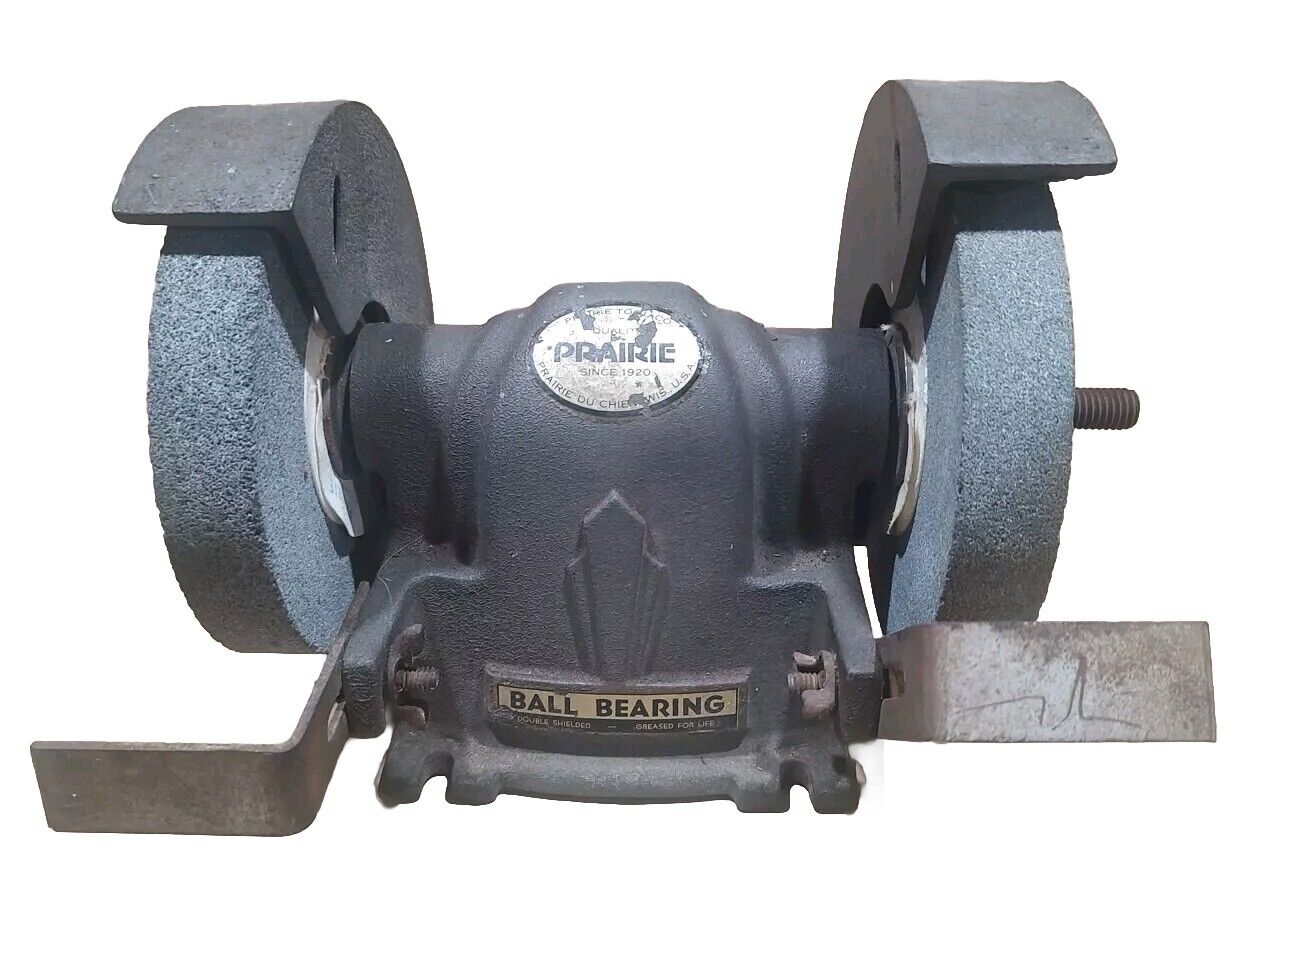 Vintage PRAIRIE Bench Grinder Belt Driven w/ Tool Rests & Stone Grinding Wheels